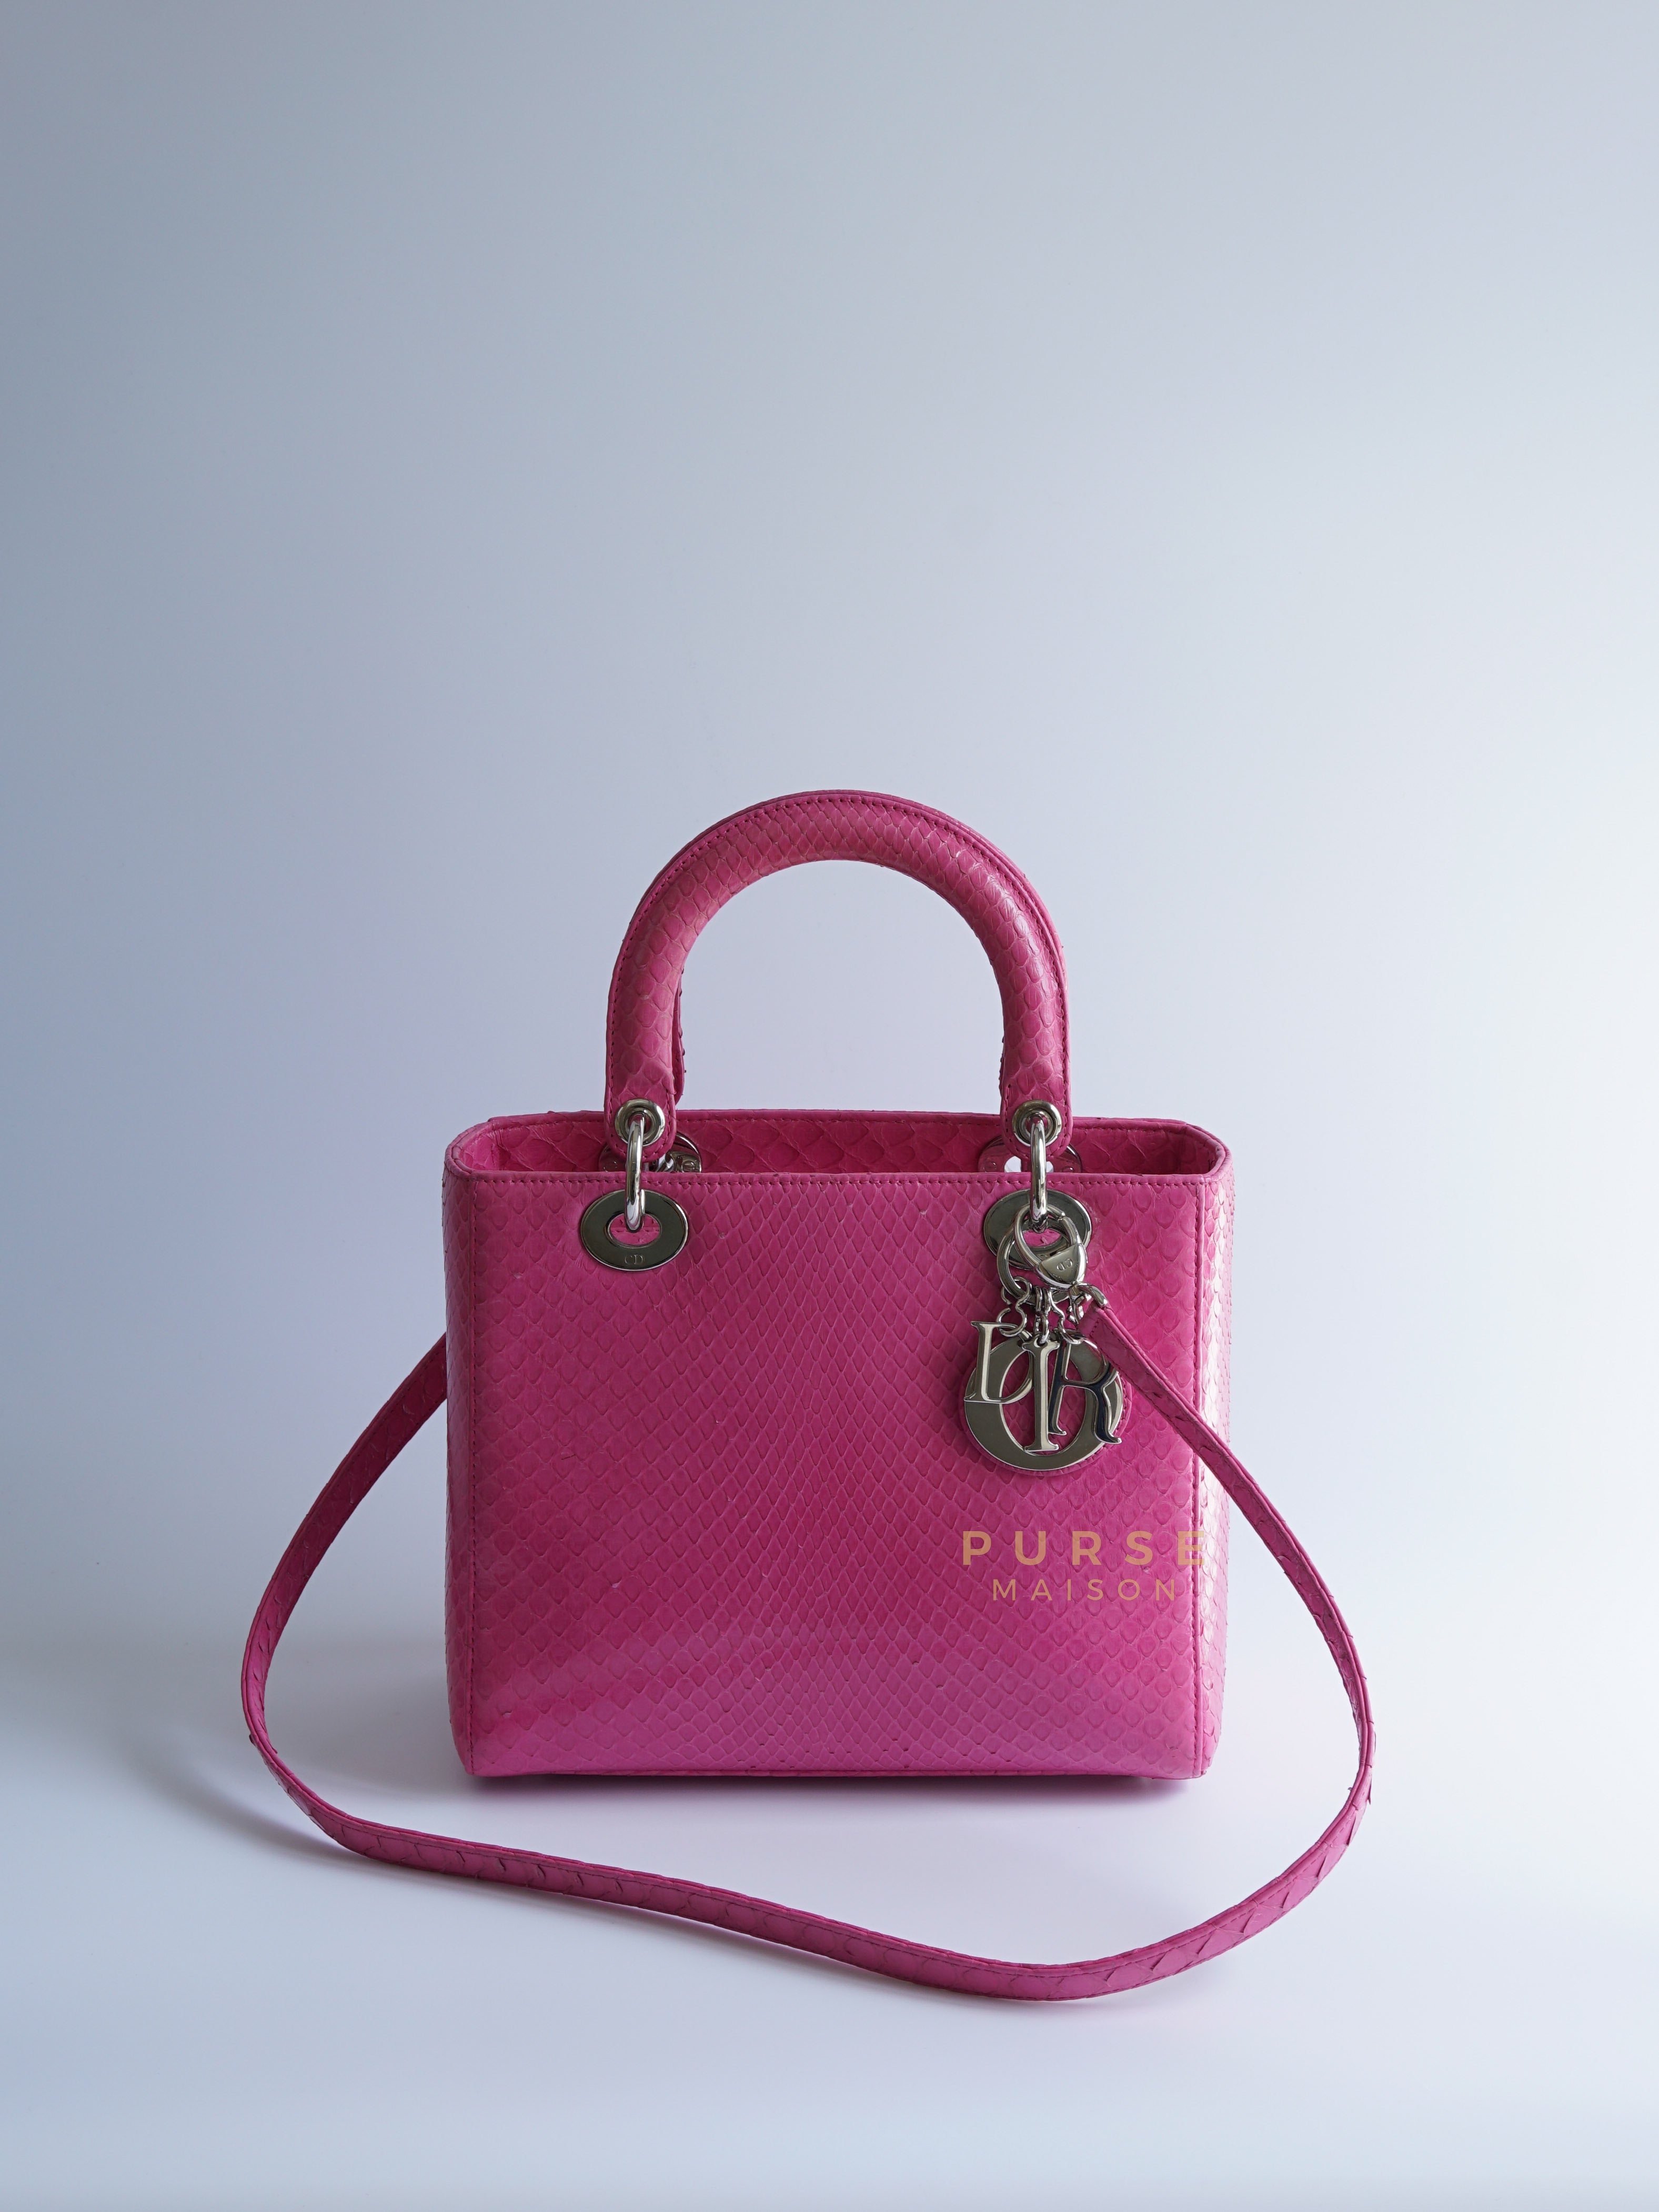 Lady Dior Python Pink Medium Silver Hardware | Purse Maison Luxury Bags Shop